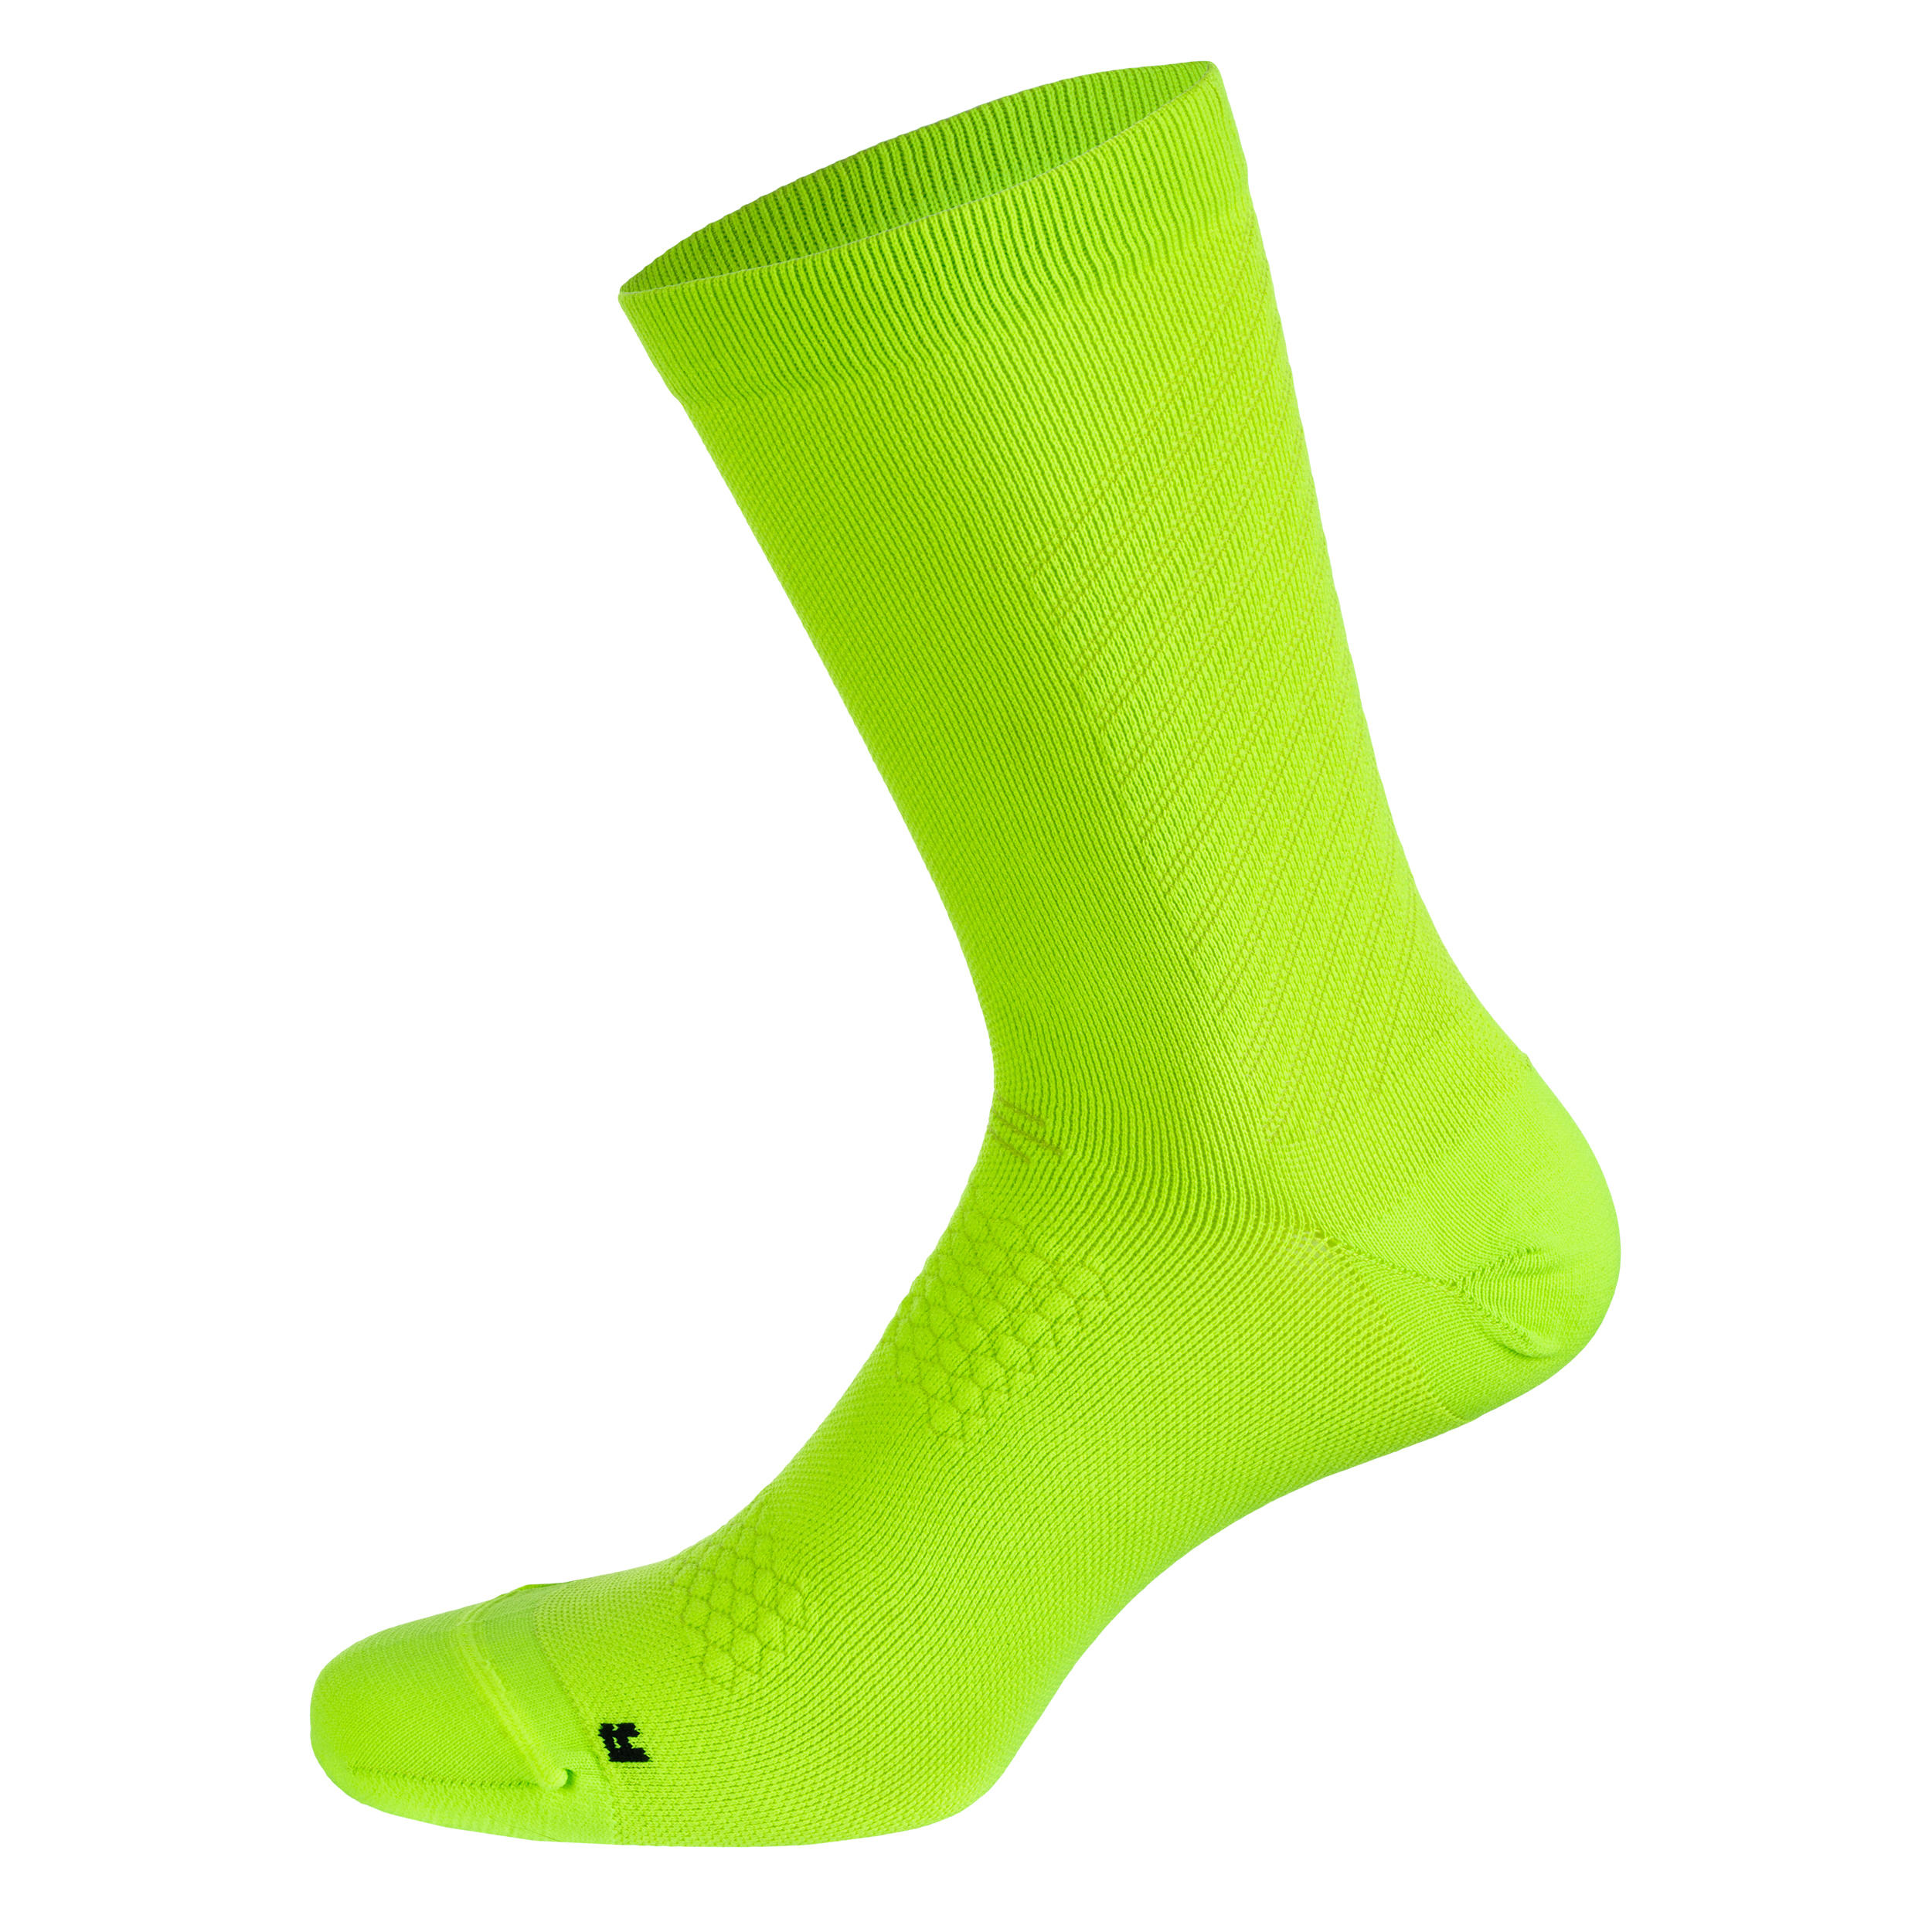 900 Road Sport Cycling Socks - Neon Yellow 3/3